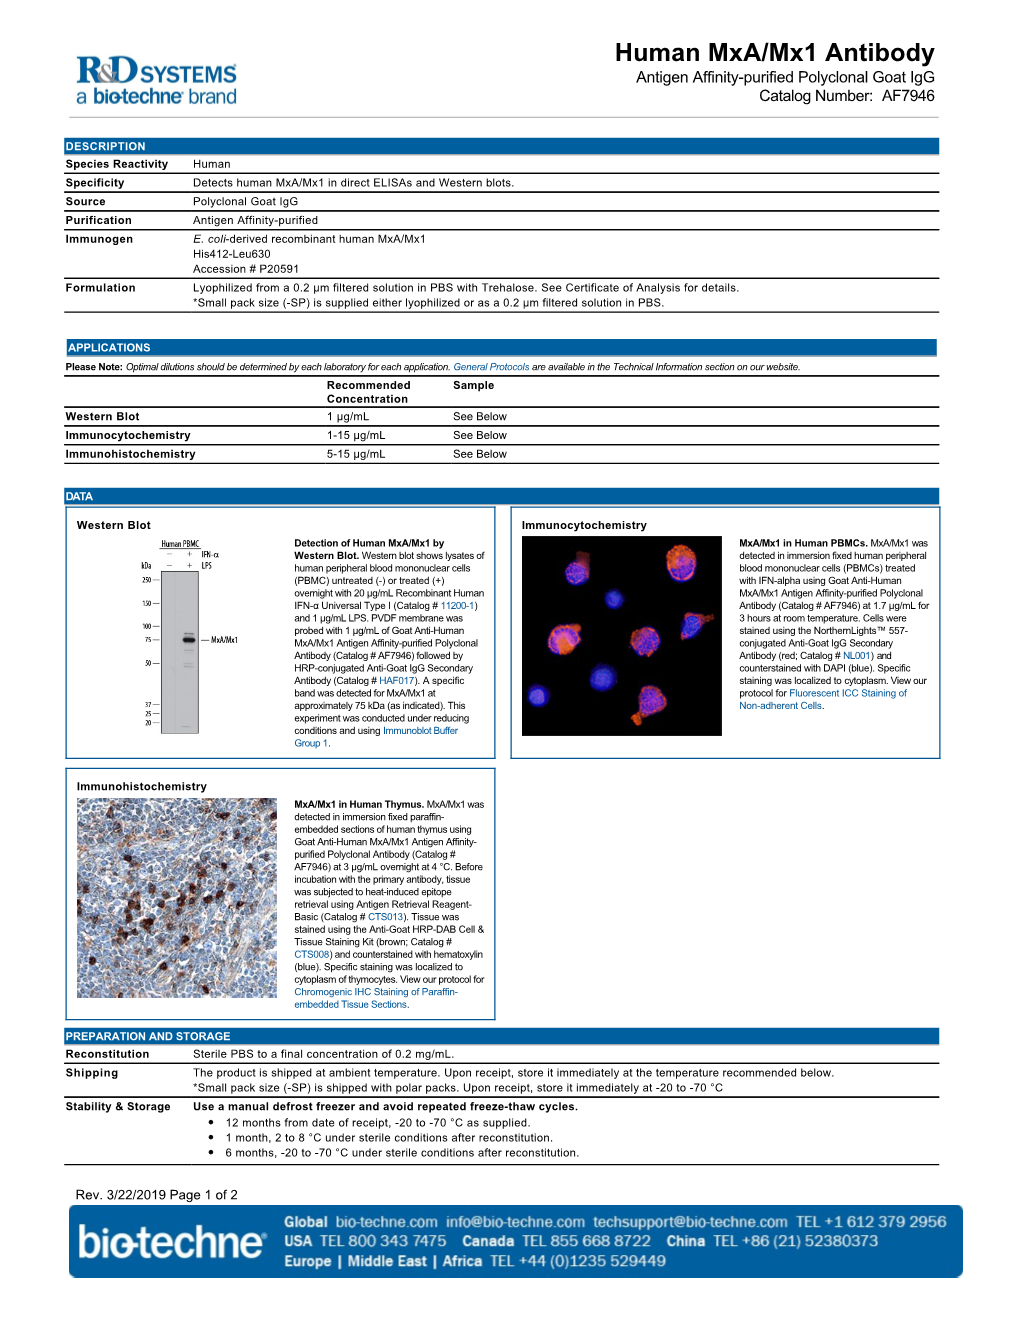 Human Mxa/Mx1 Antibody Antigen Affinity-Purified Polyclonal Goat Igg Catalog Number: AF7946